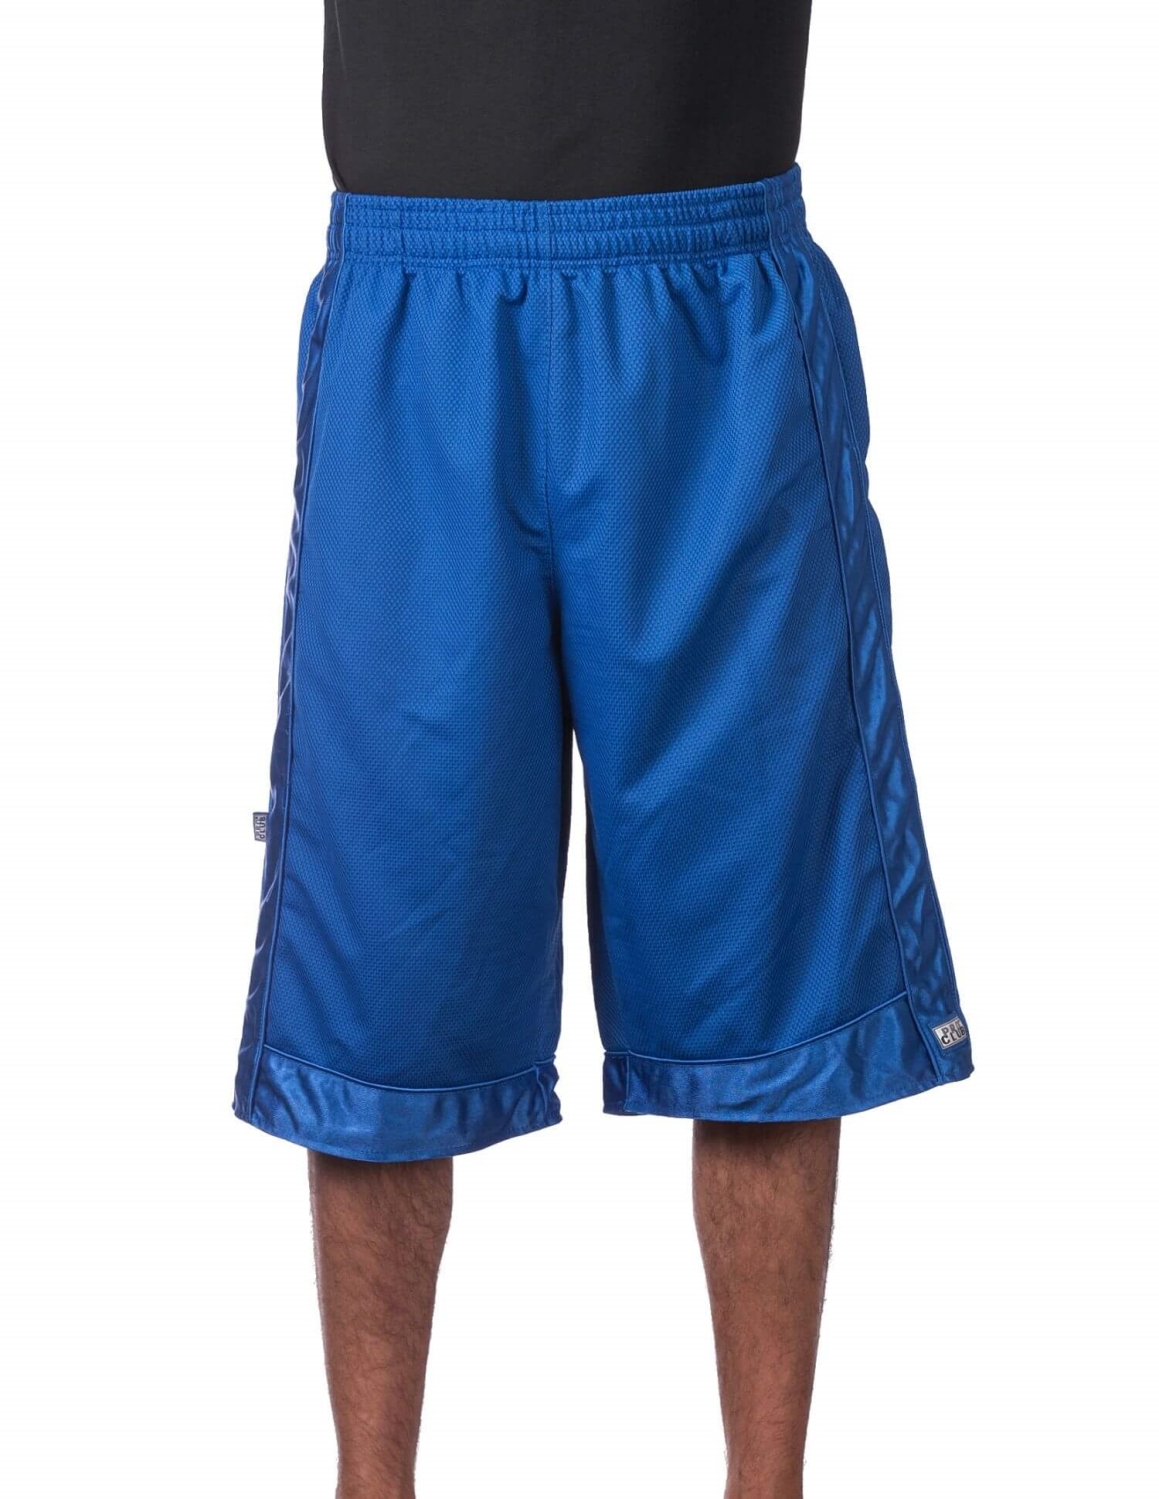 Pro Club Heavyweight Mesh Basketball Shorts - Coup Manukau